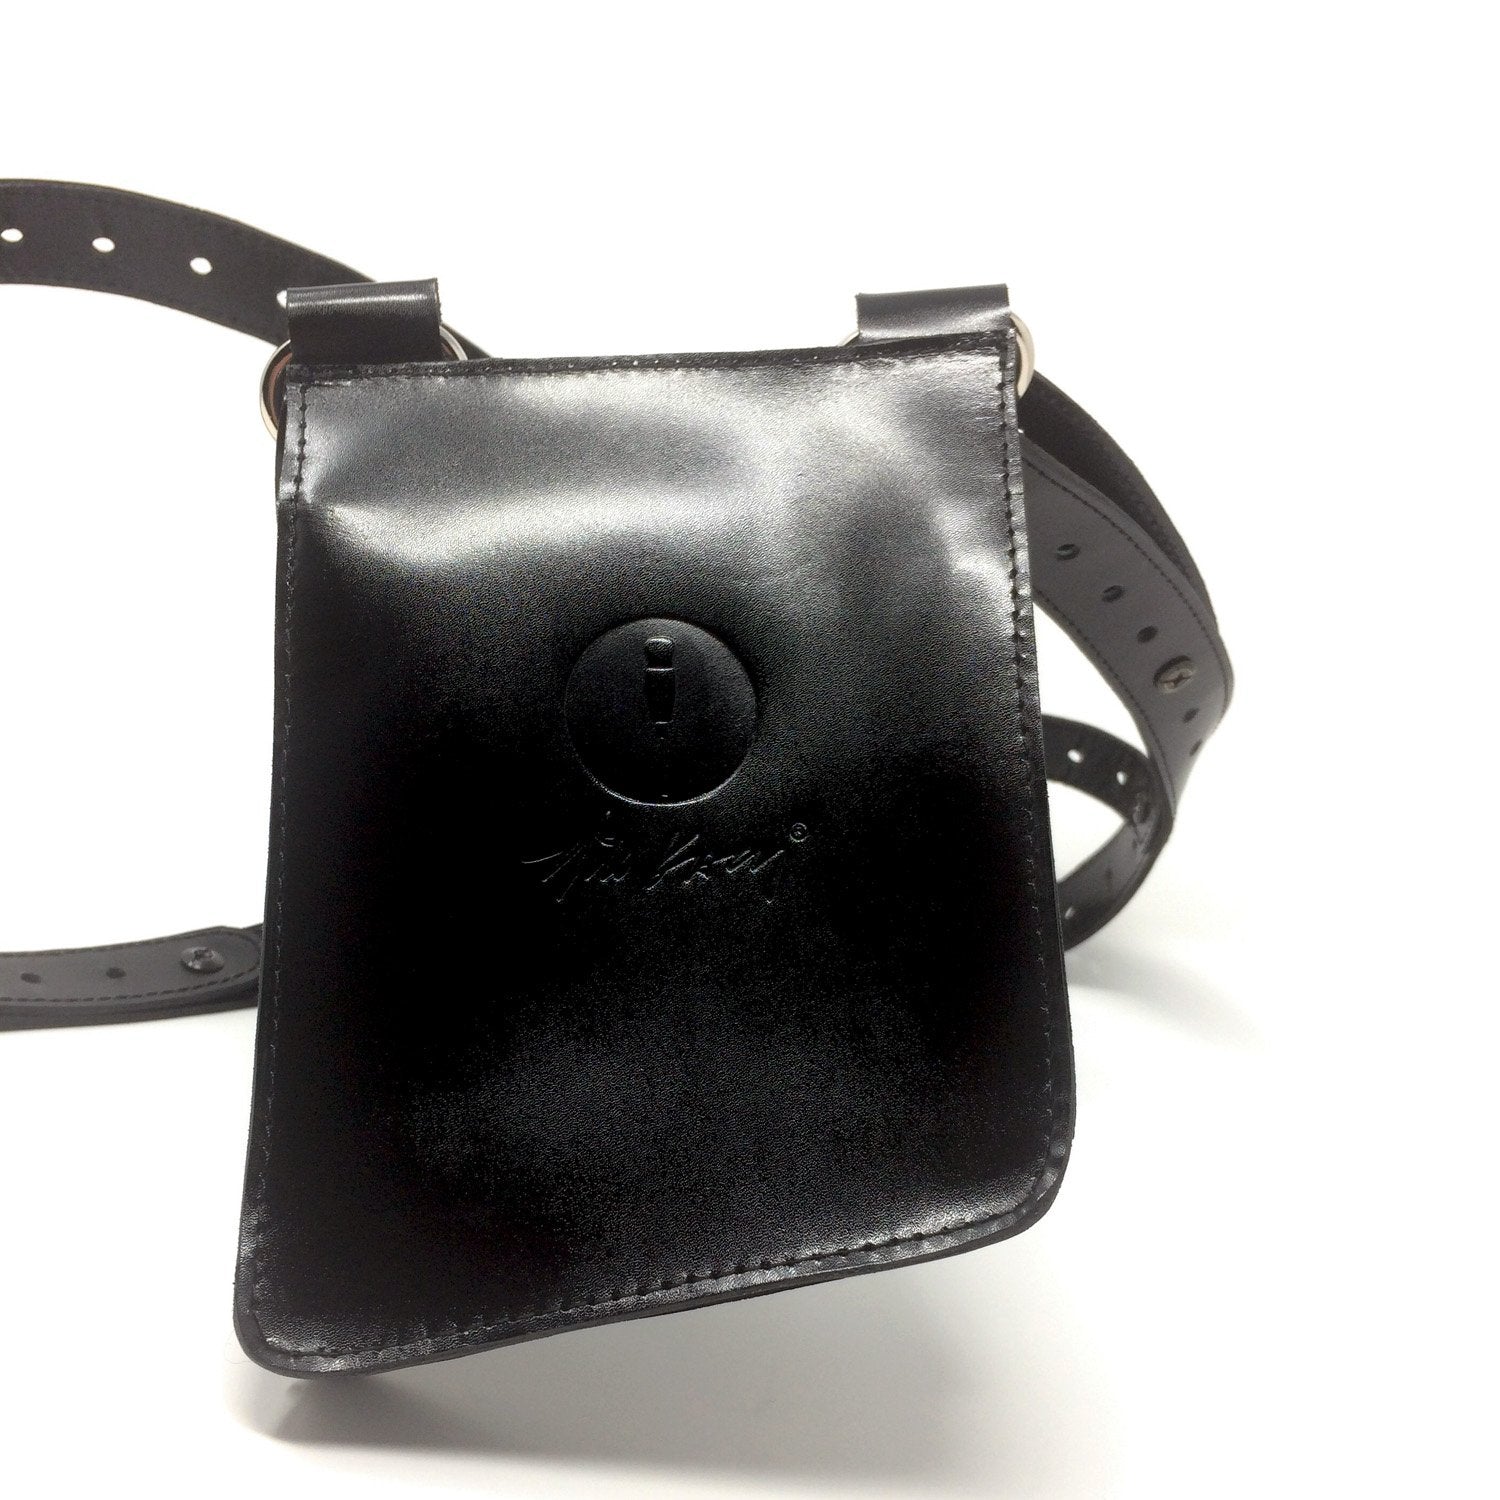 Harness | or + NEW) v2 Dual) Utility NiK Bag Adjustable Kacy Holster Genderfree Modular with (Single